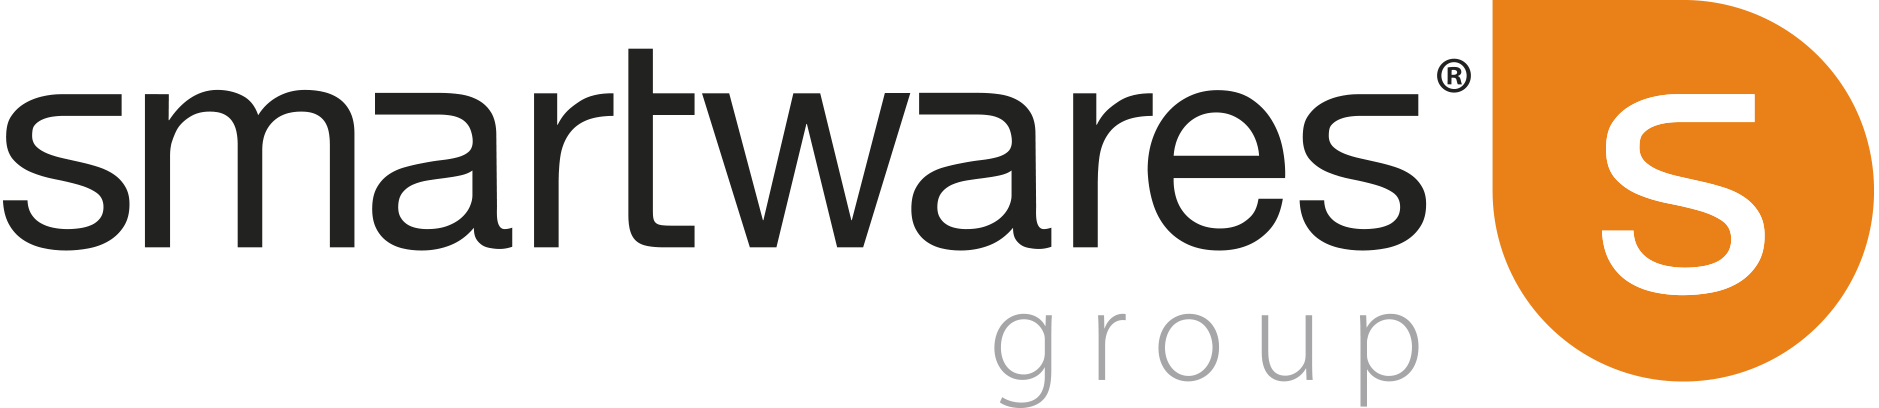 Smartwares Group